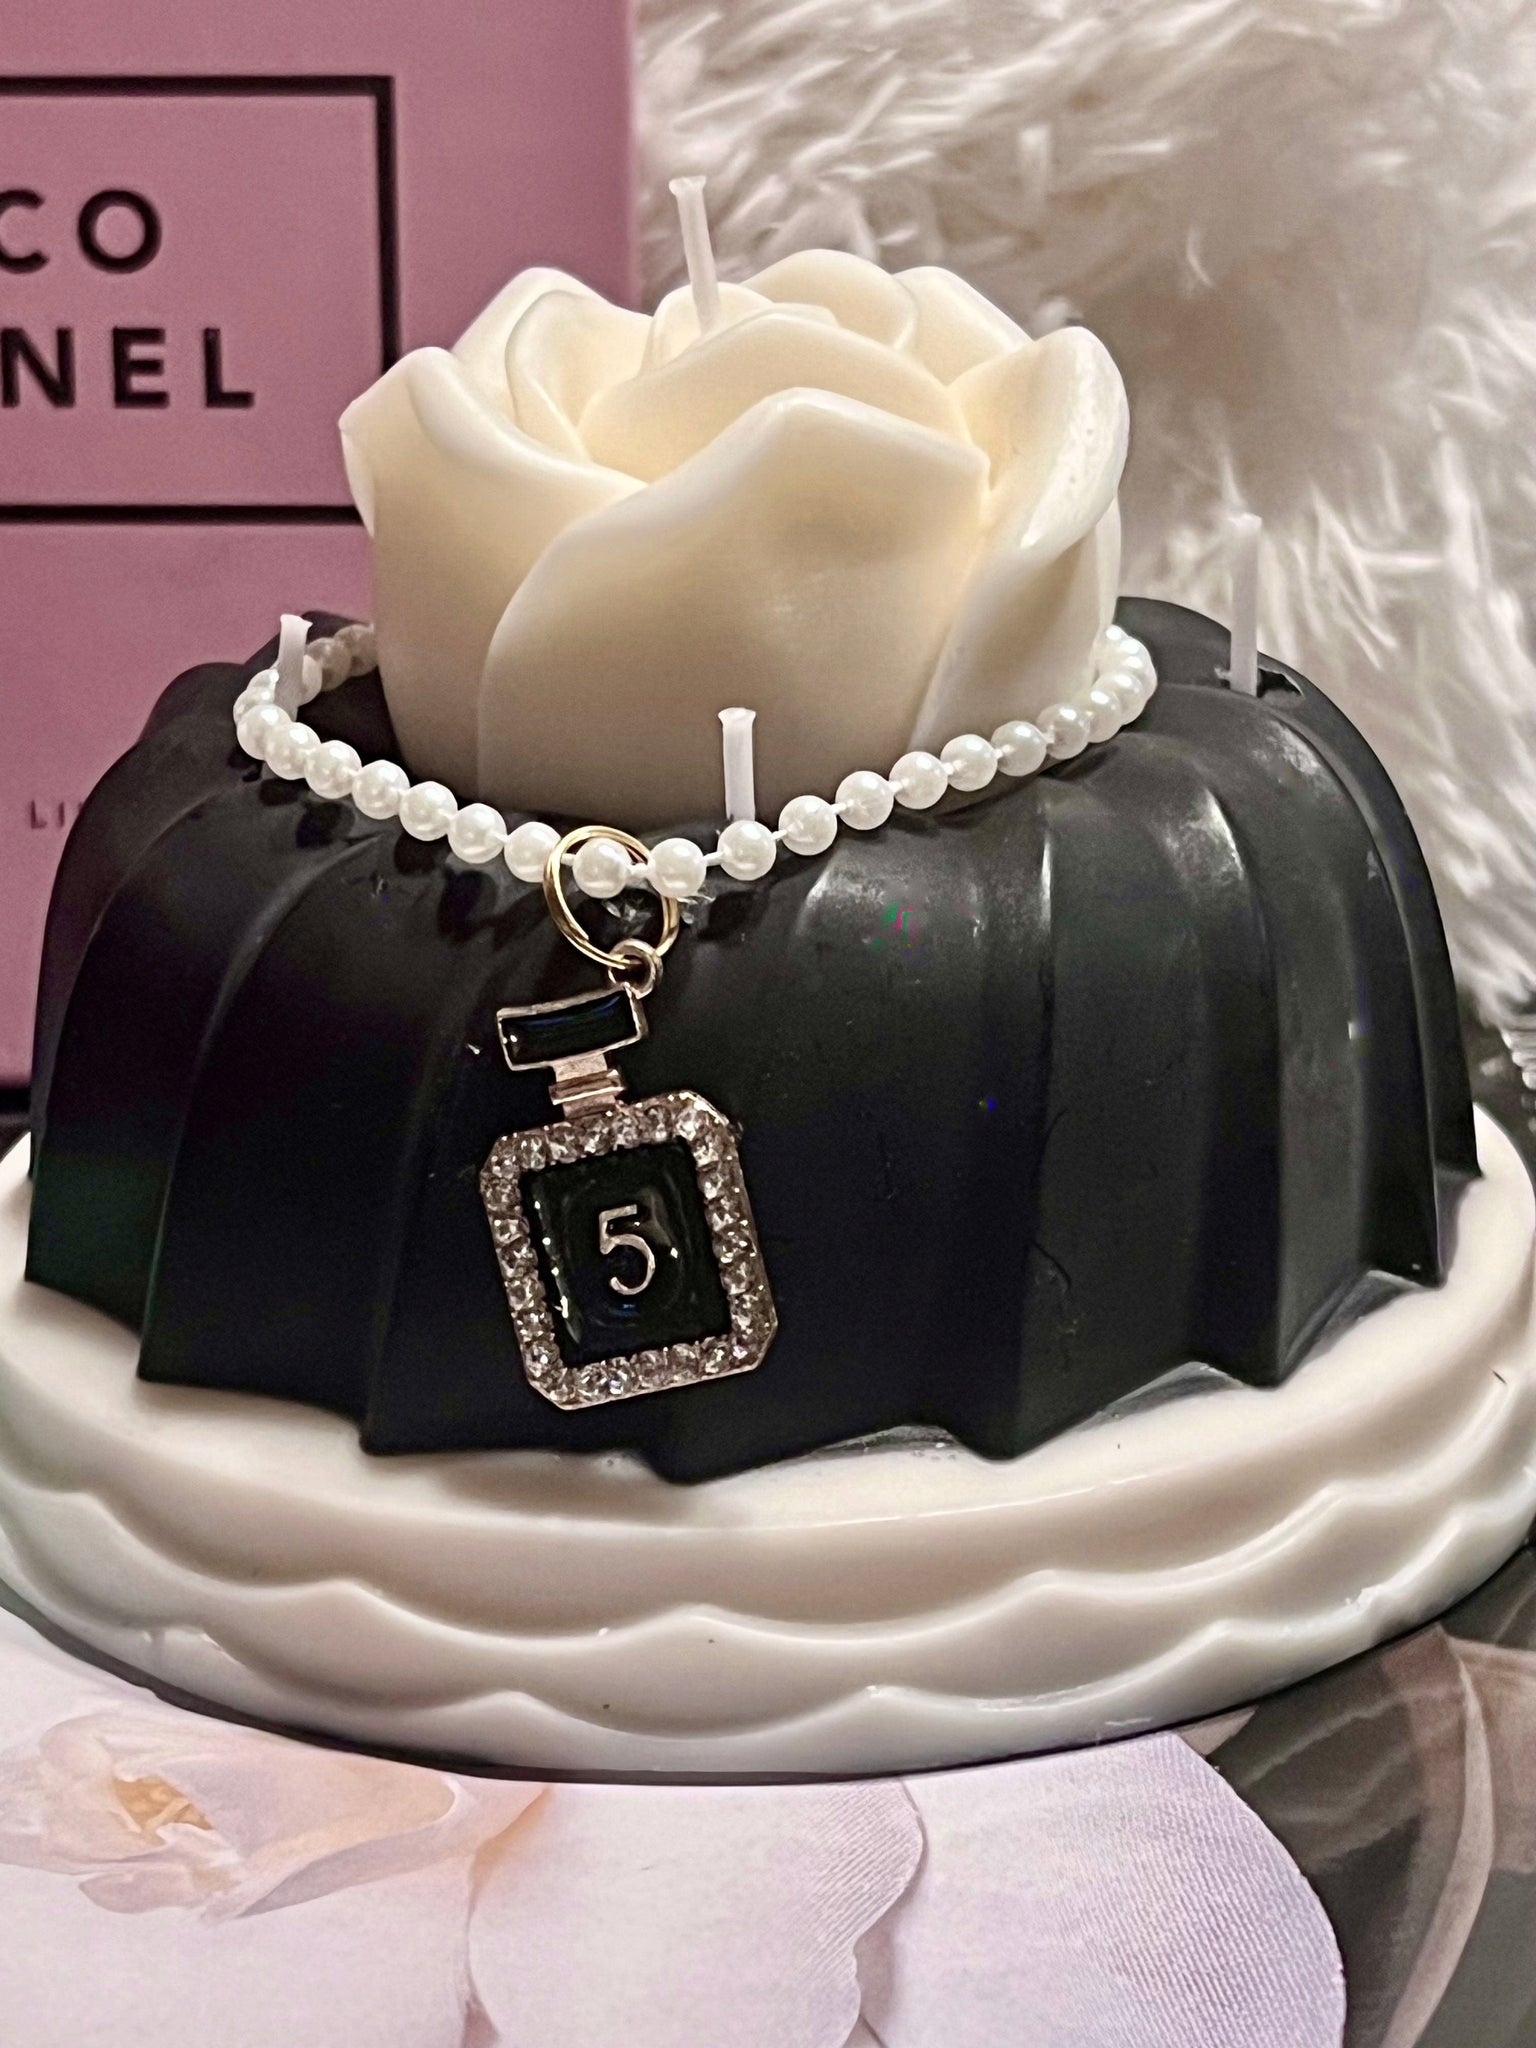 Chanel Theme Birthday Cake - Sooperlicious Cakes